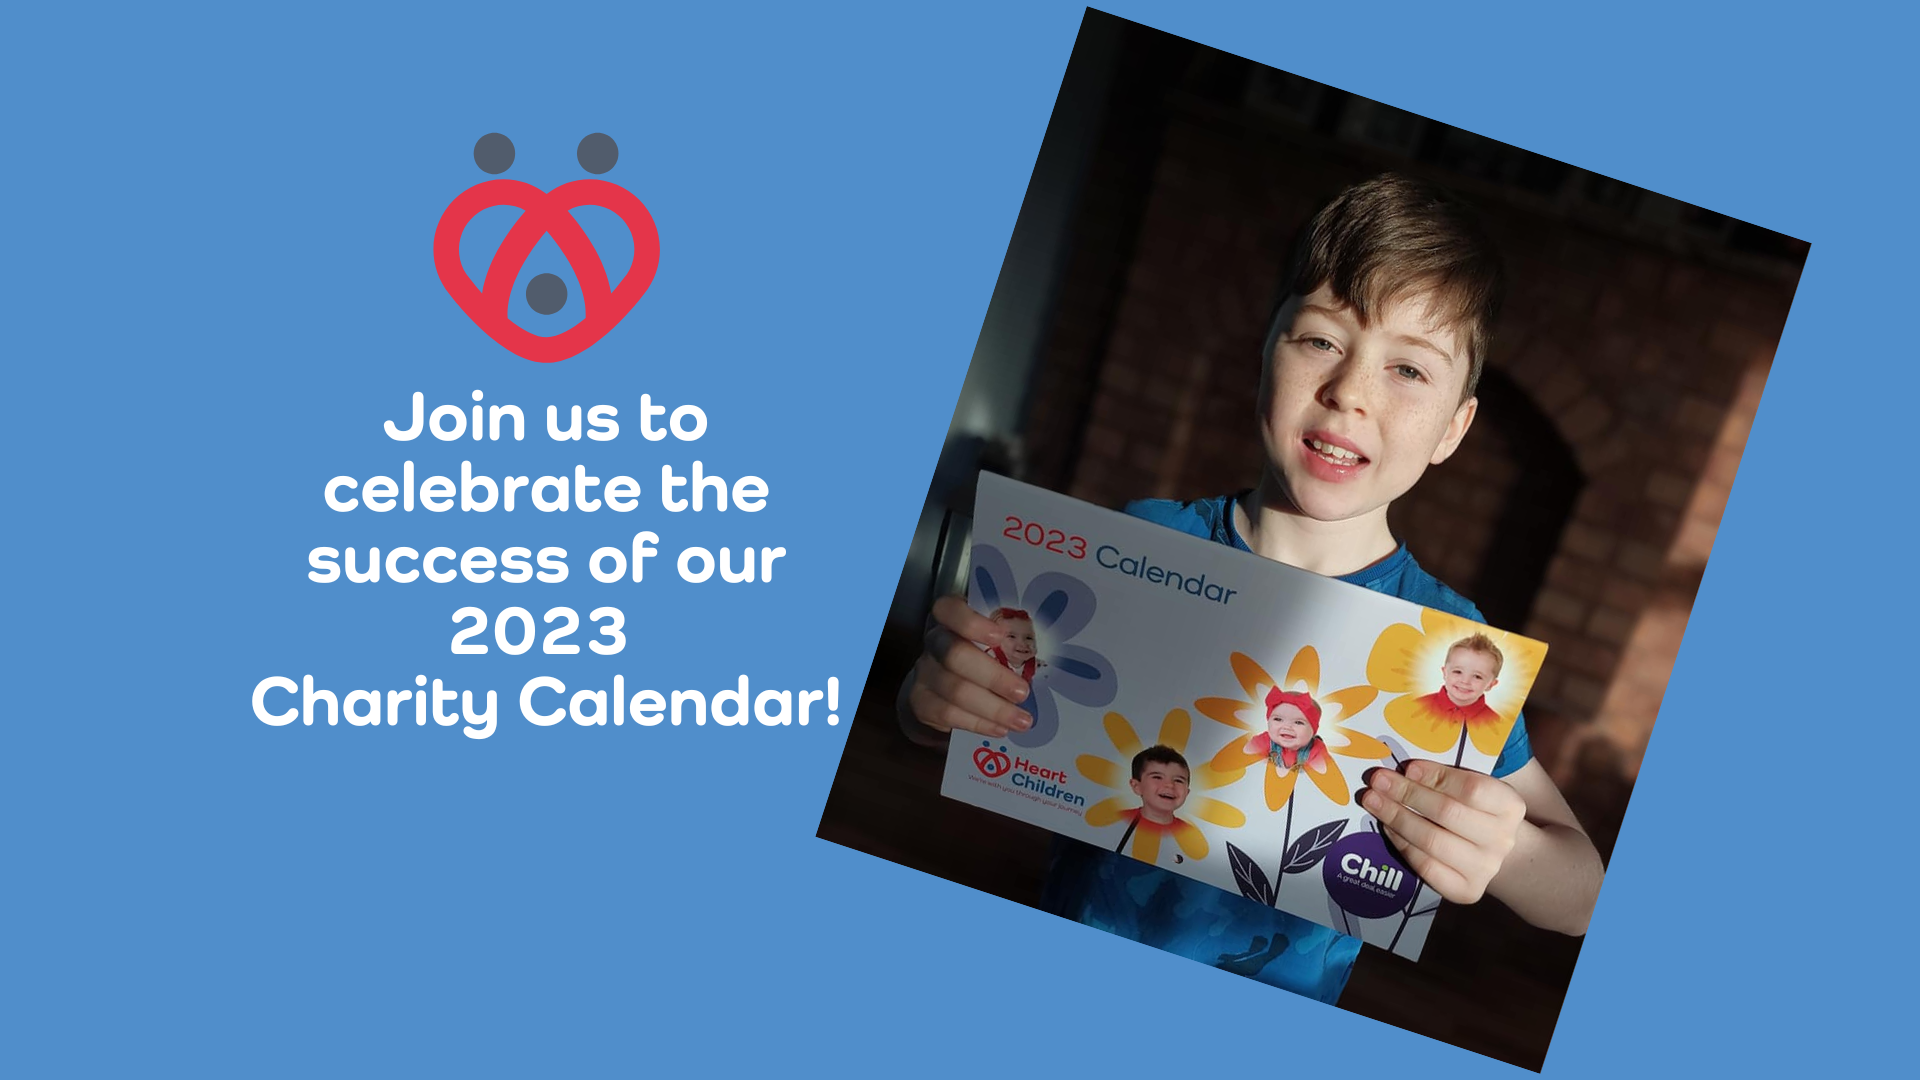 Charity Calendar Celebration!